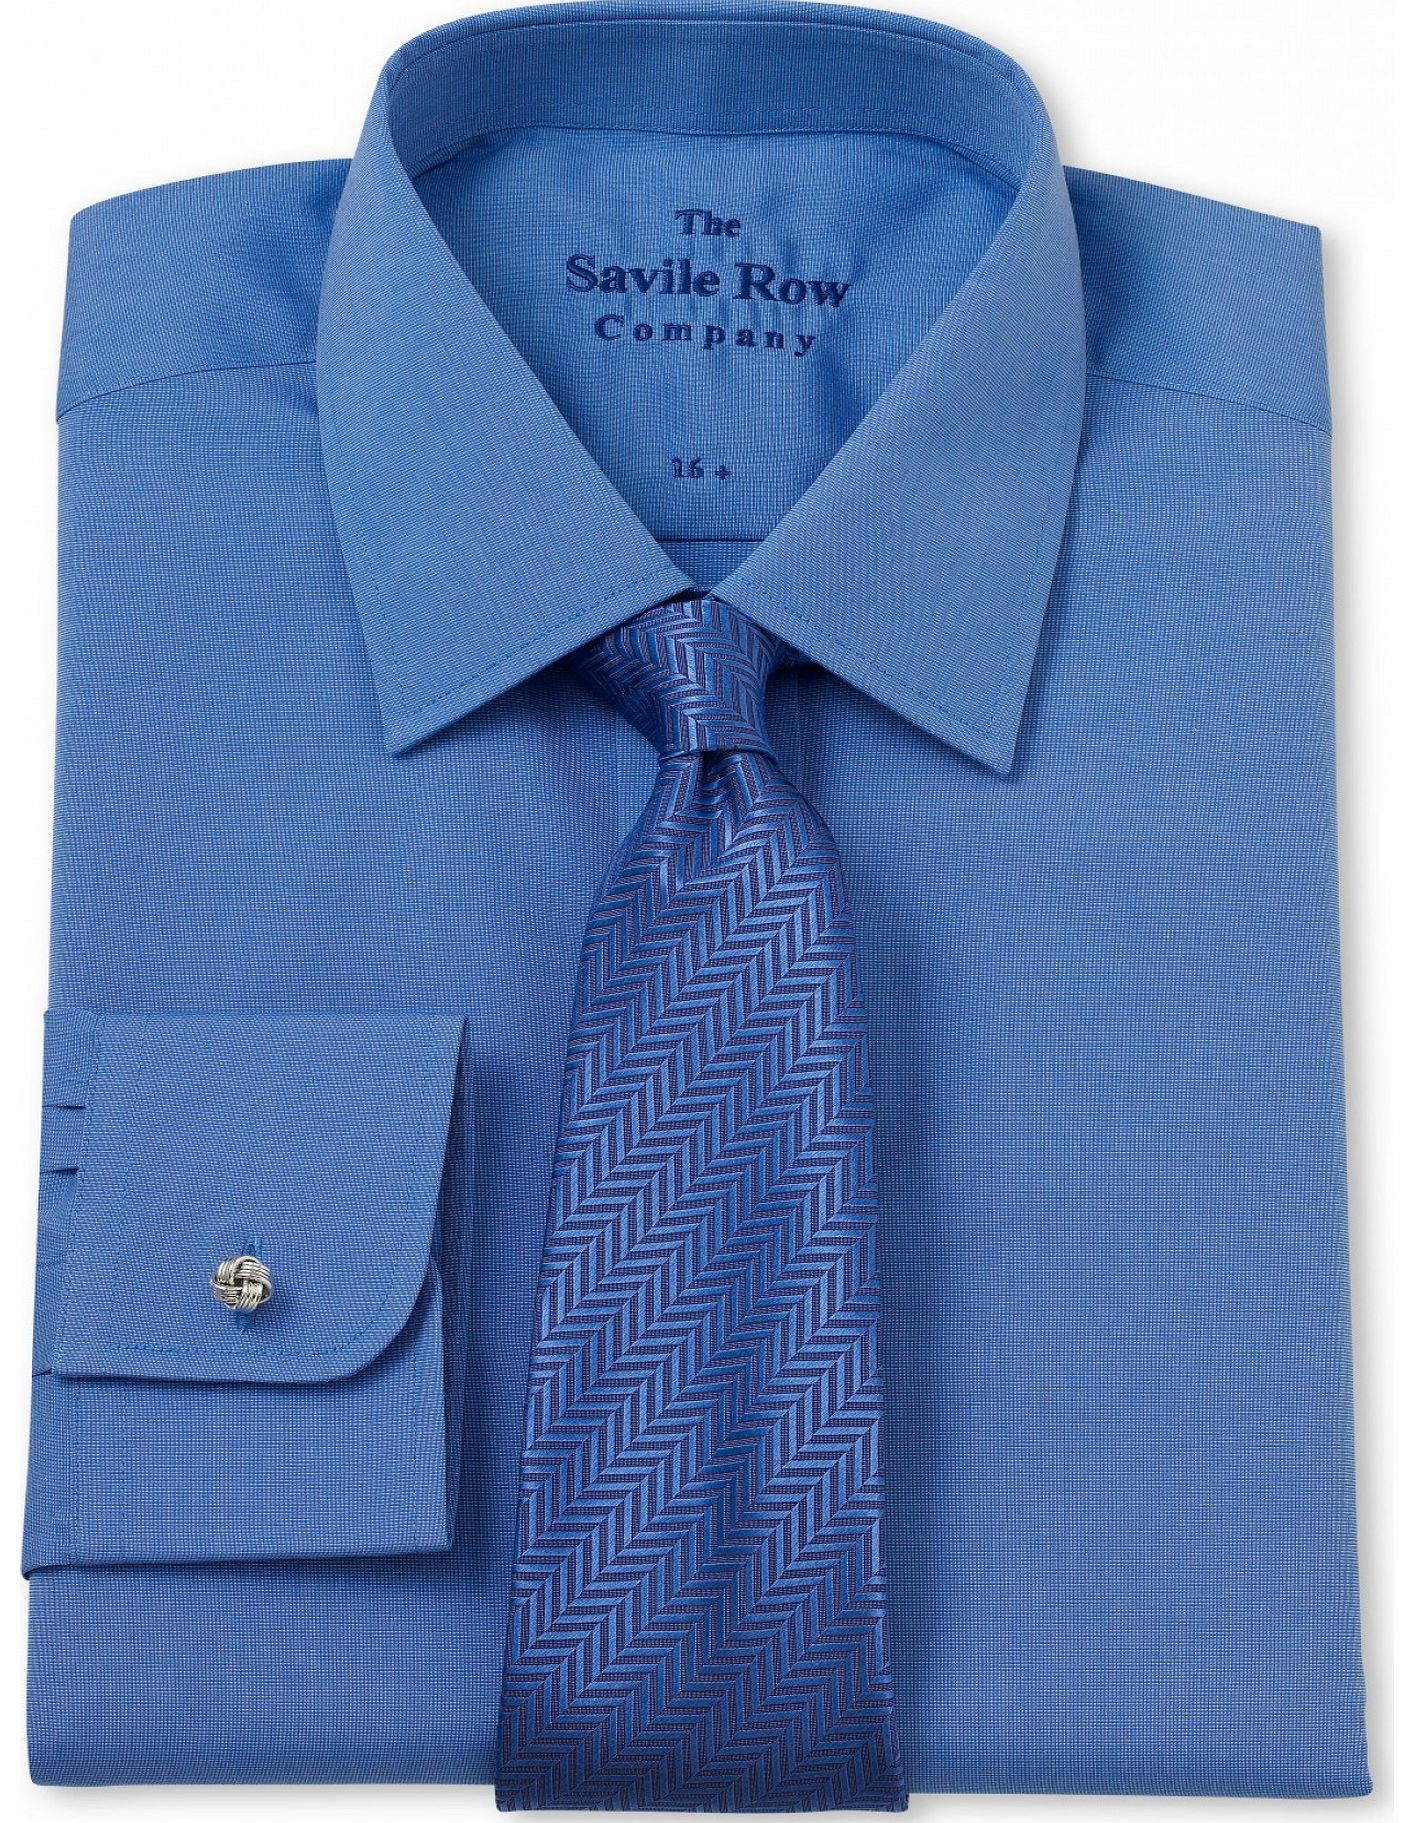 Savile Row Company Blue End on End Slim Fit Shirt 14 1/2`` Standard